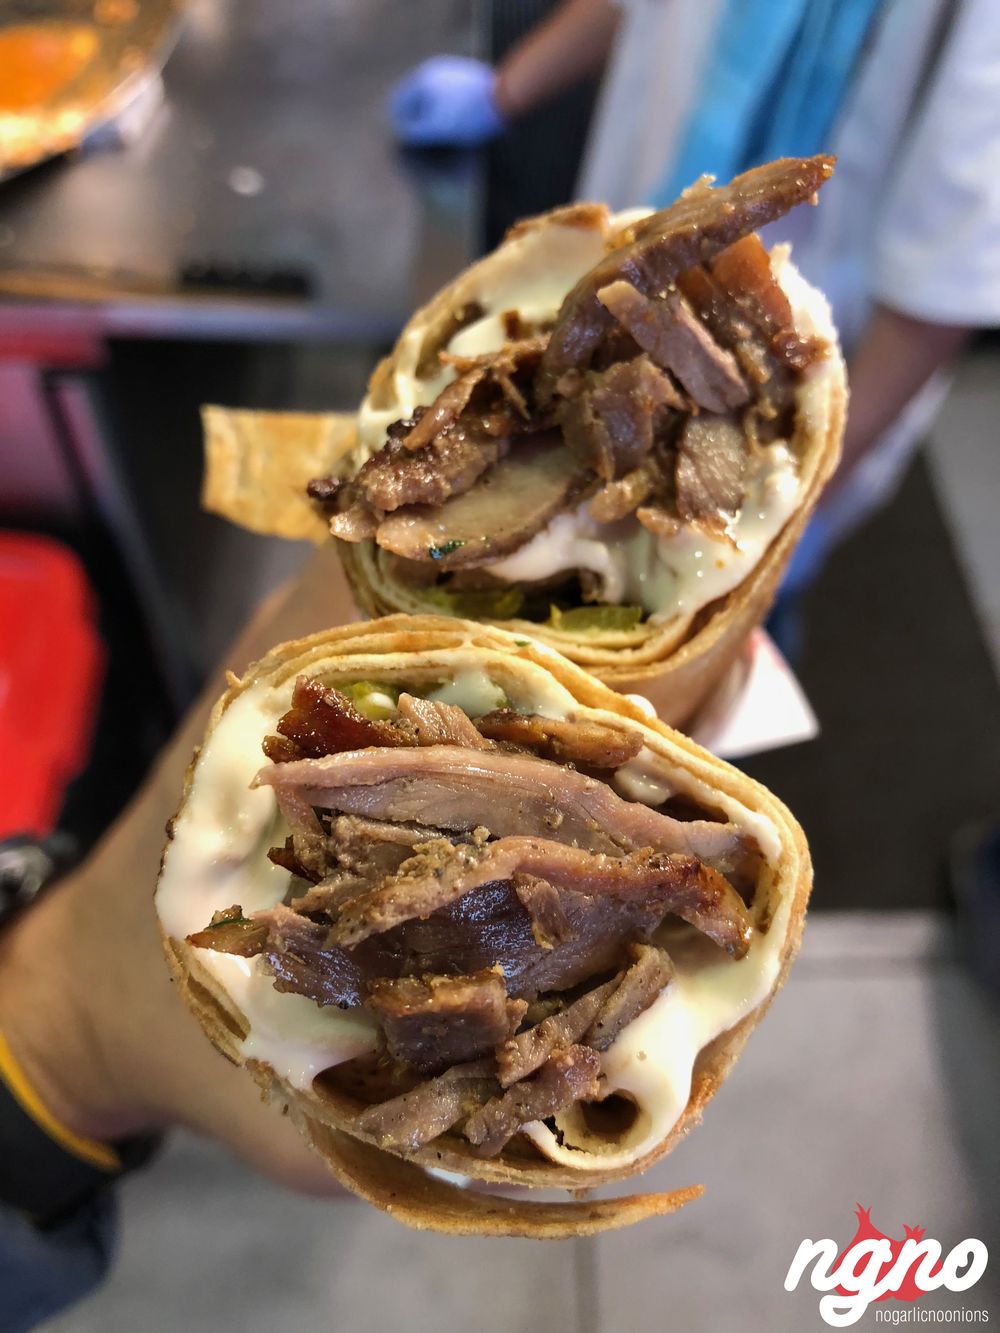 shawarma2019-01-11-02-00-01